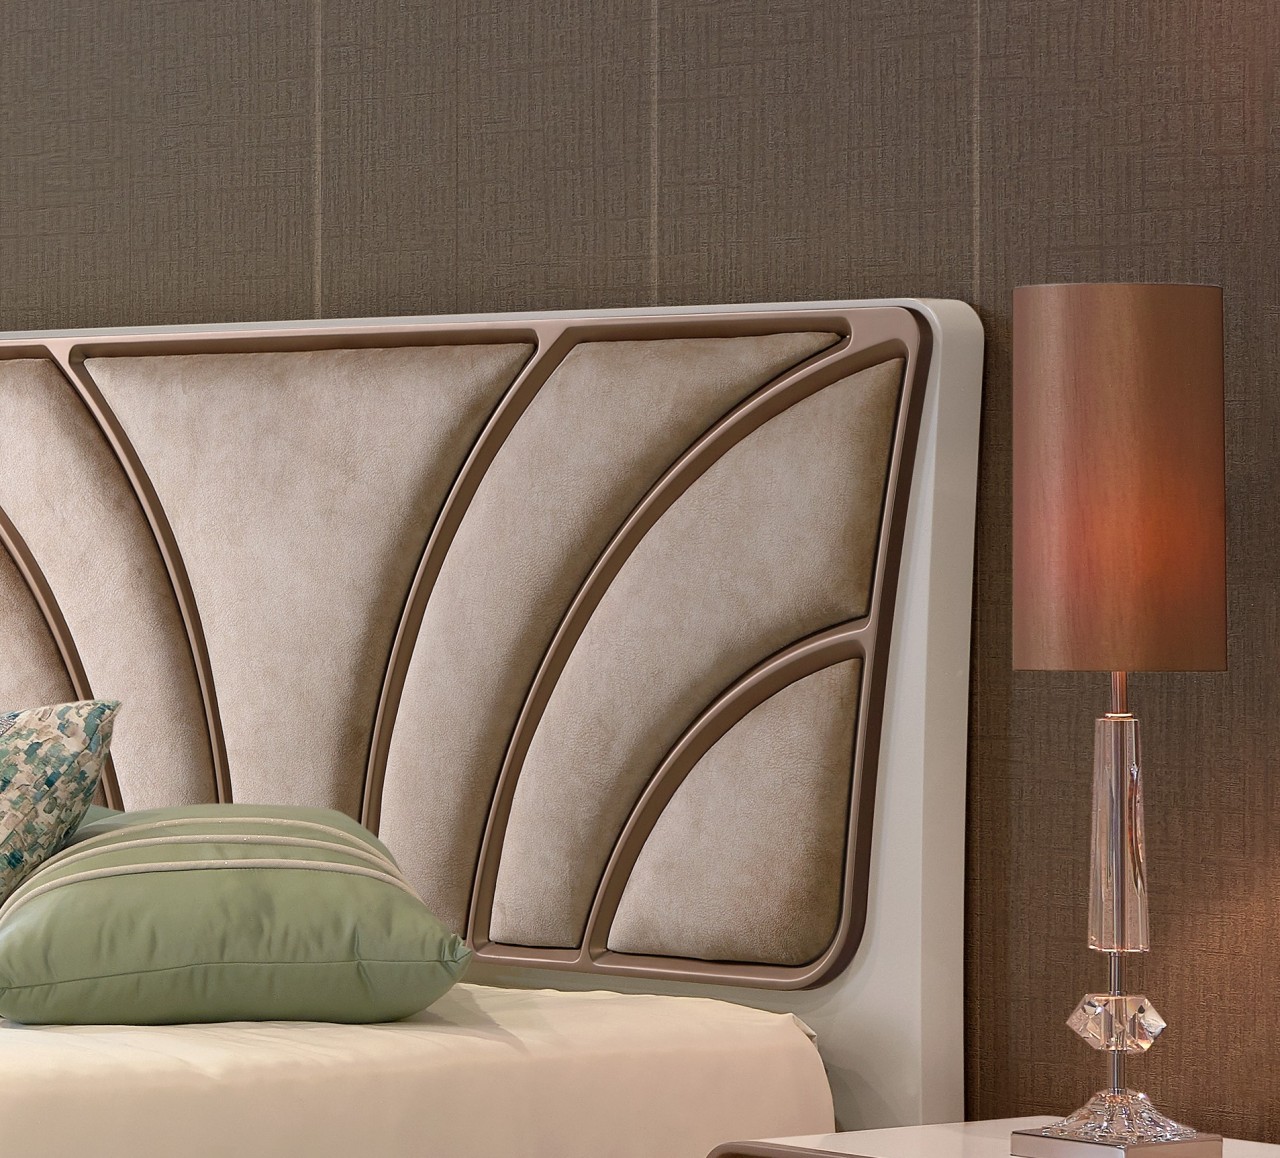 O descanso perfeito que merece. A cama de casal Musa New é a escolha ideal para a sua noite de sonho.